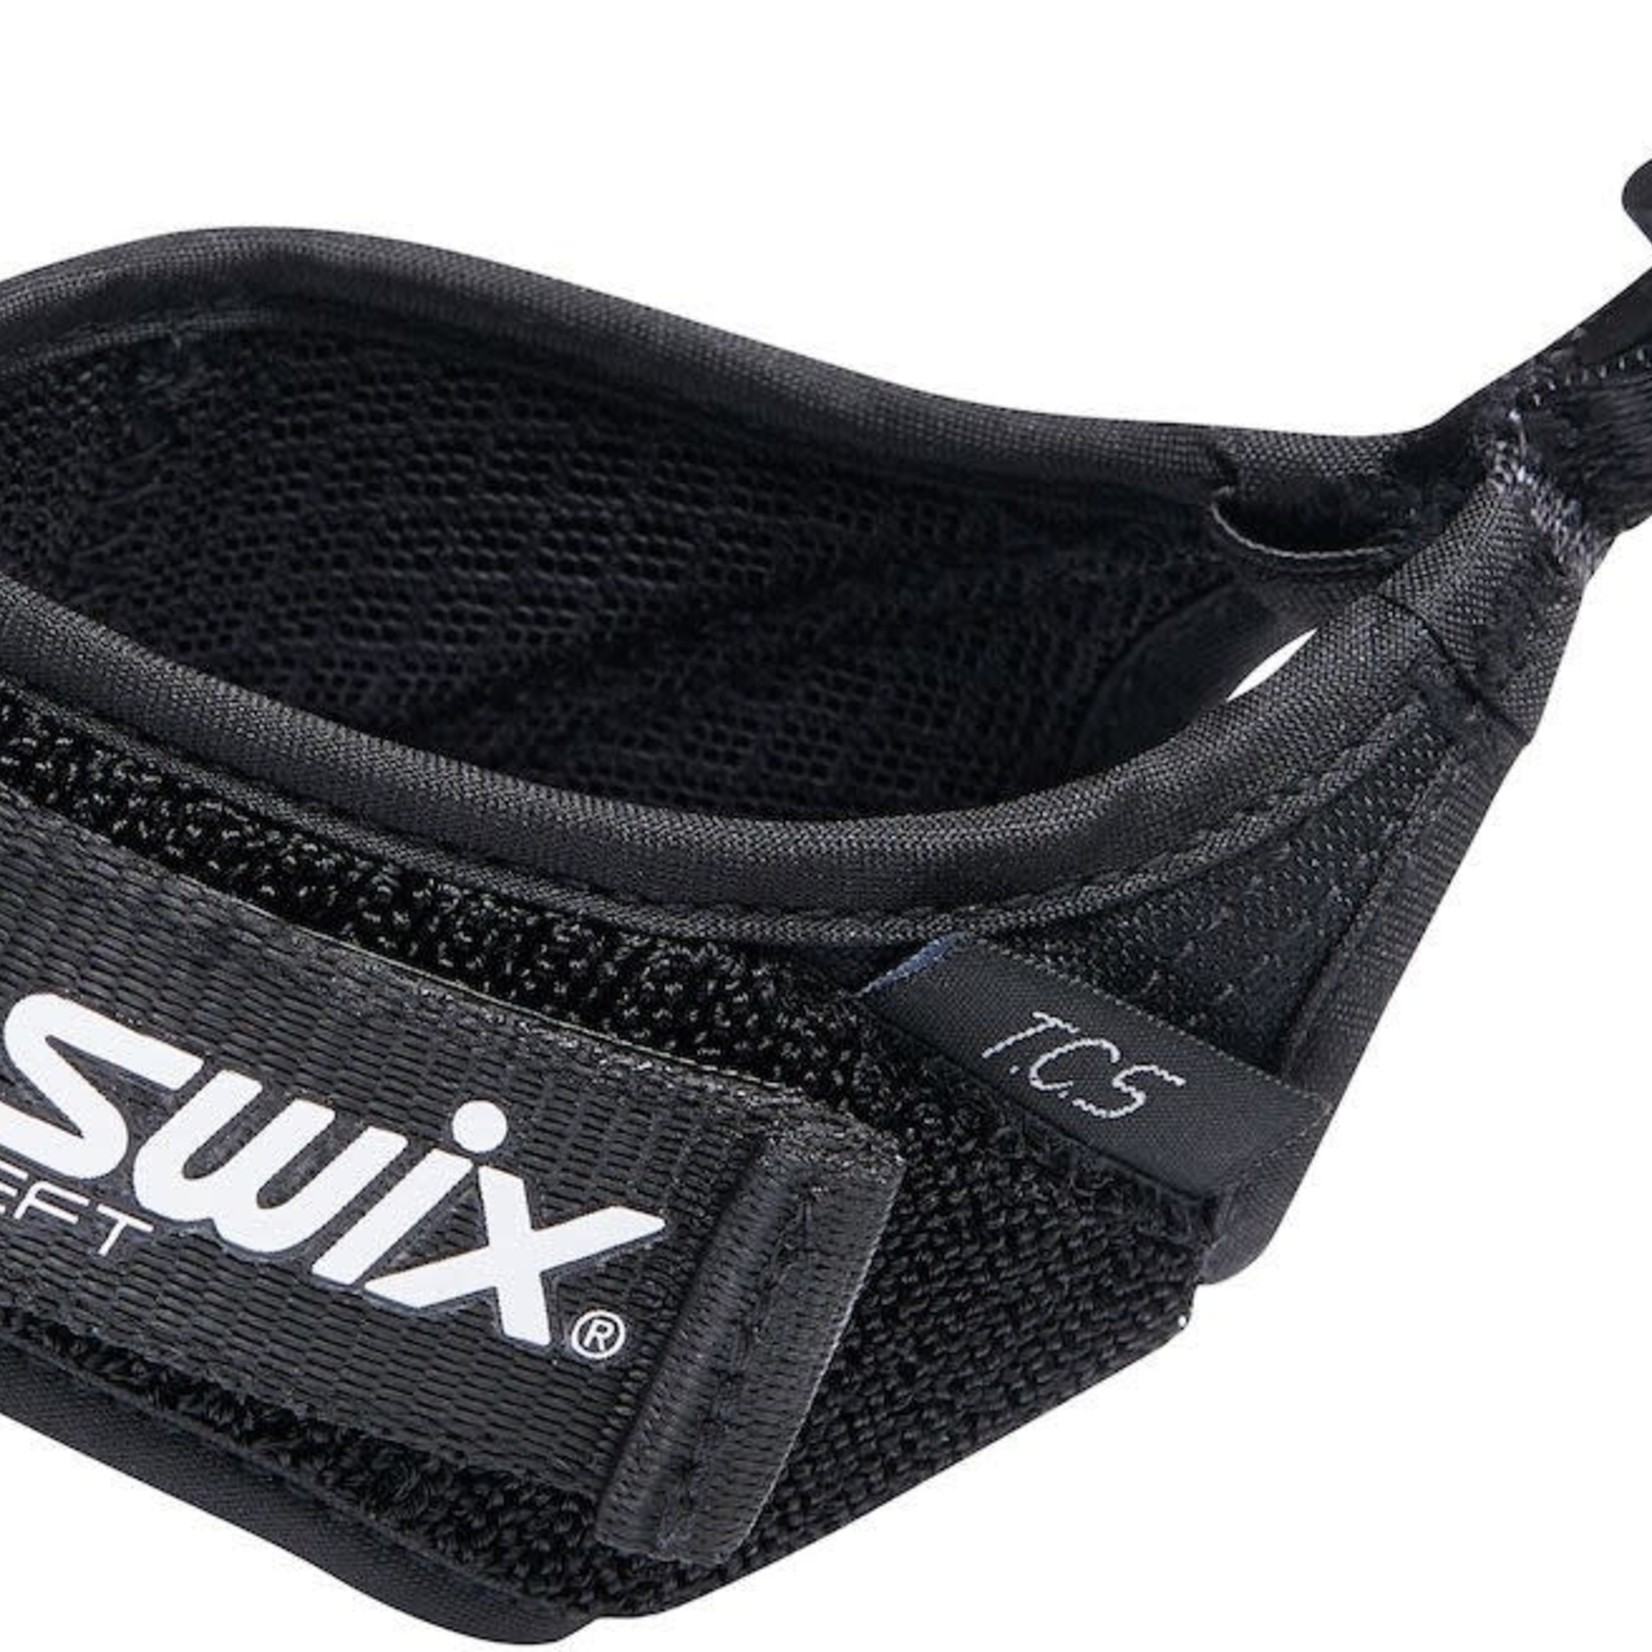 Swix SWIX, Pro Fit TCS XC Strap